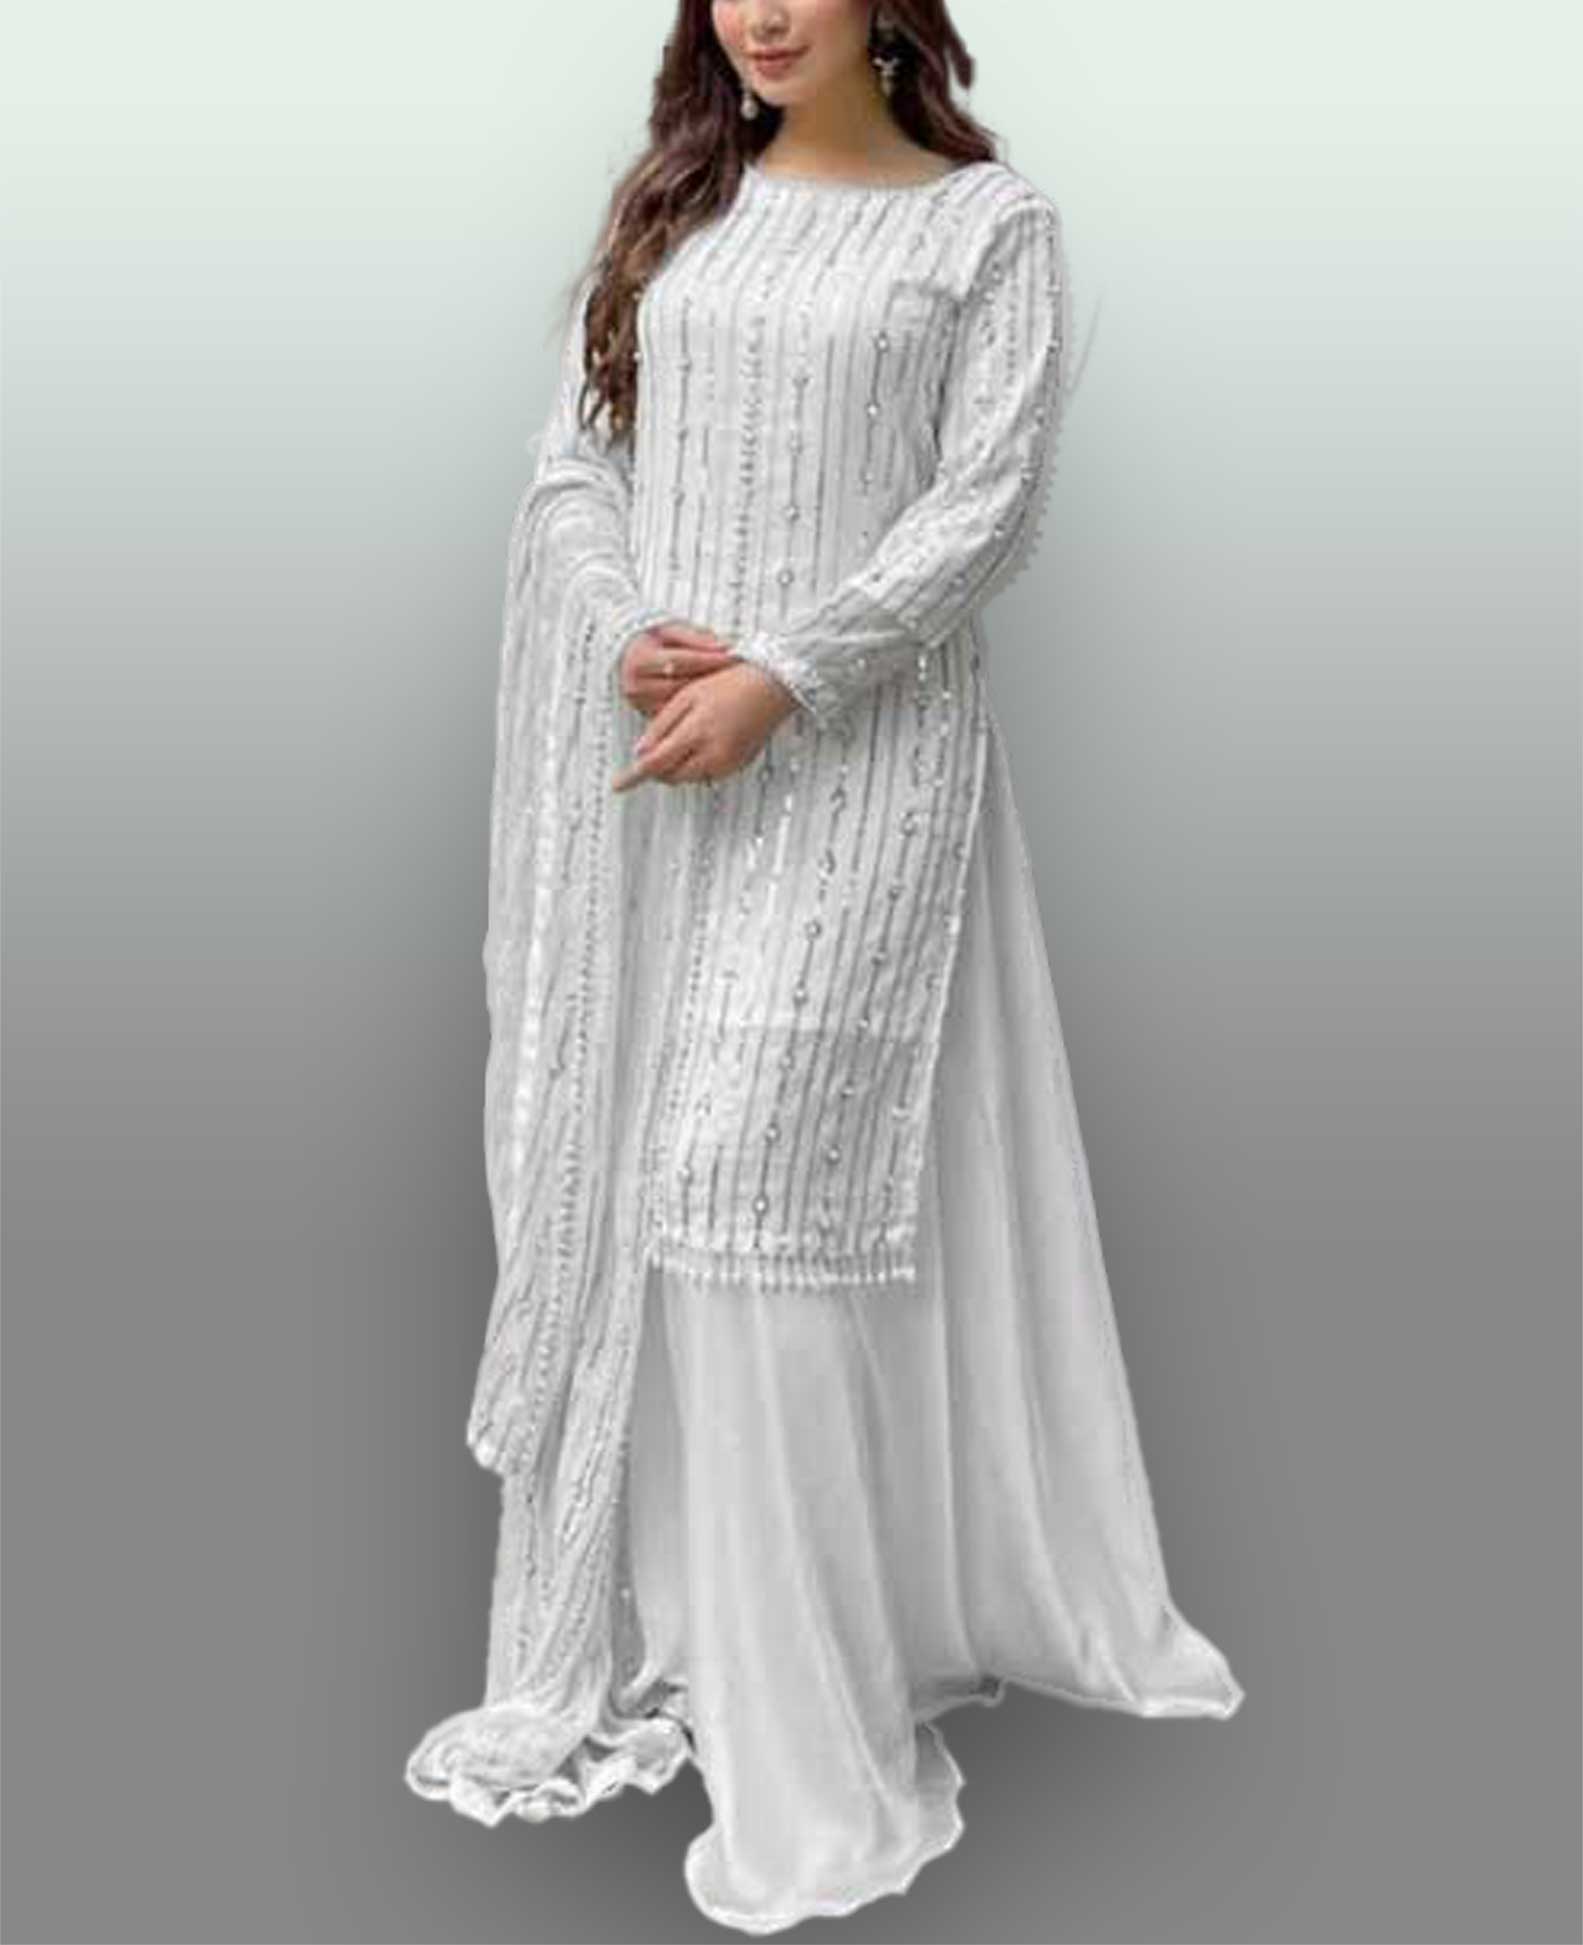 Mirror Work Embroidery Chiffon Dress (DZ12768) at Discount Price in Pakistan  – DressyZone.com